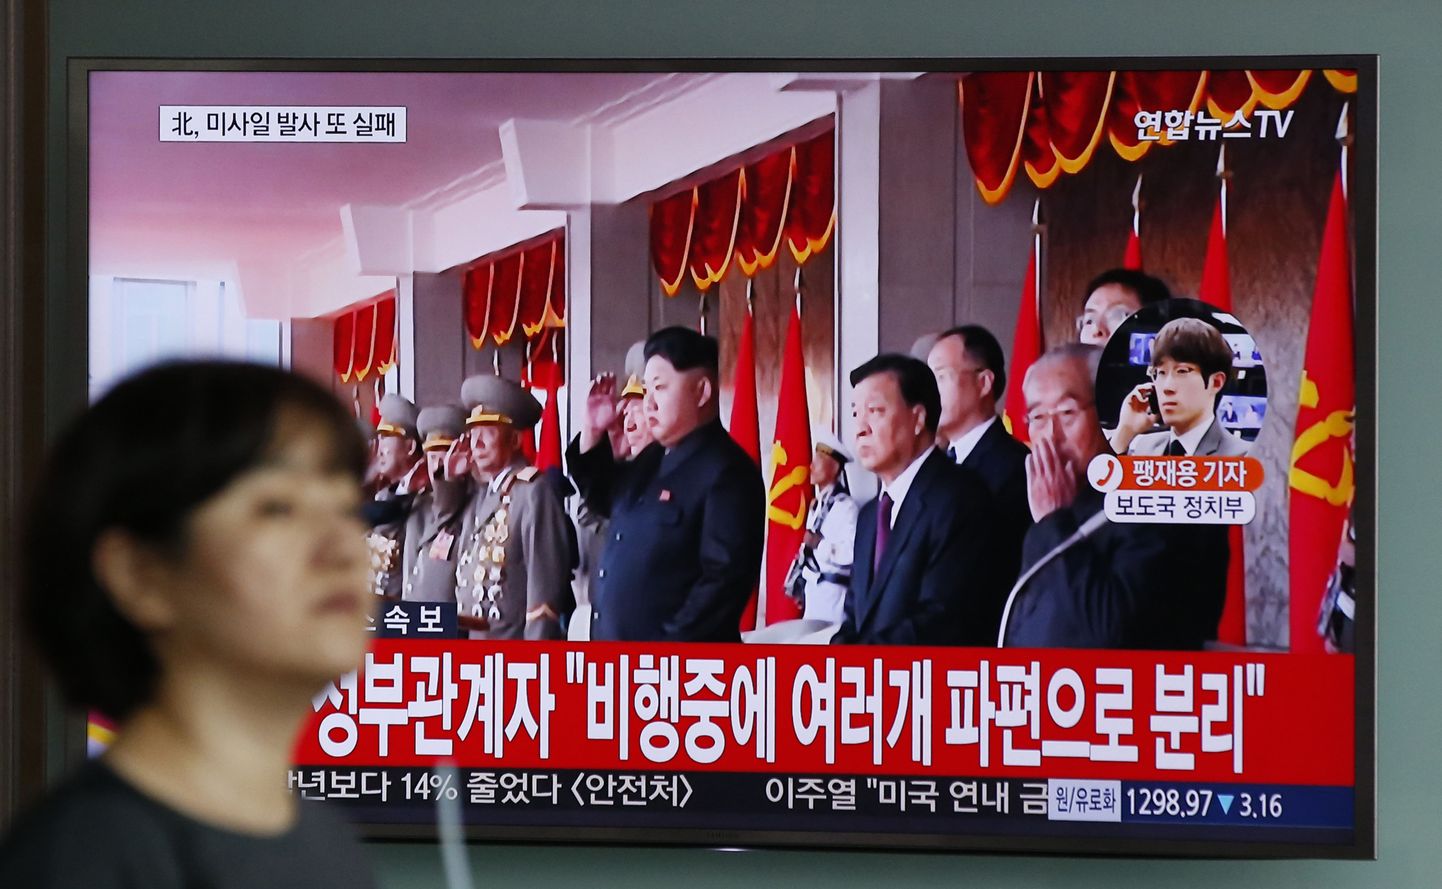 Kim Jong-un jäi raketikatsetusega väga rahule.